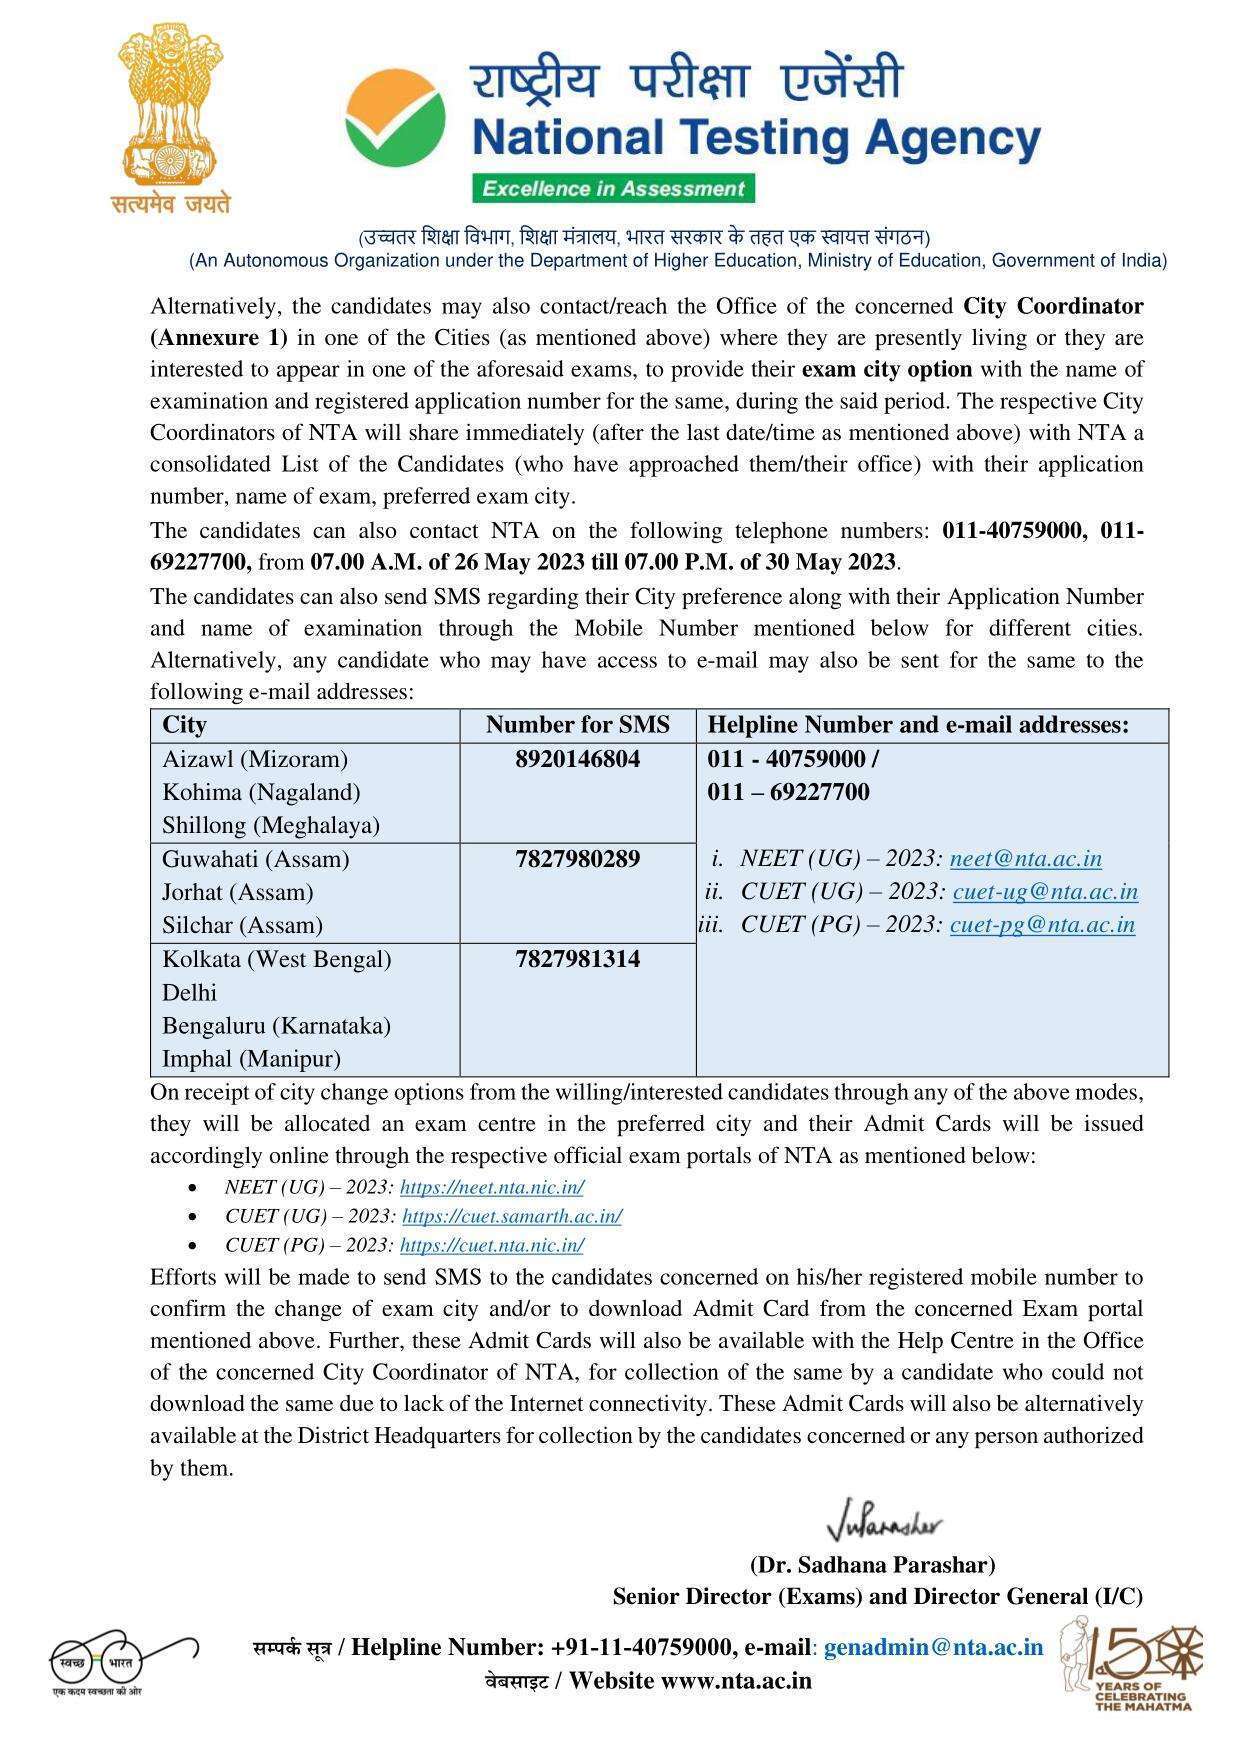 NEET Manipur update pdf-2